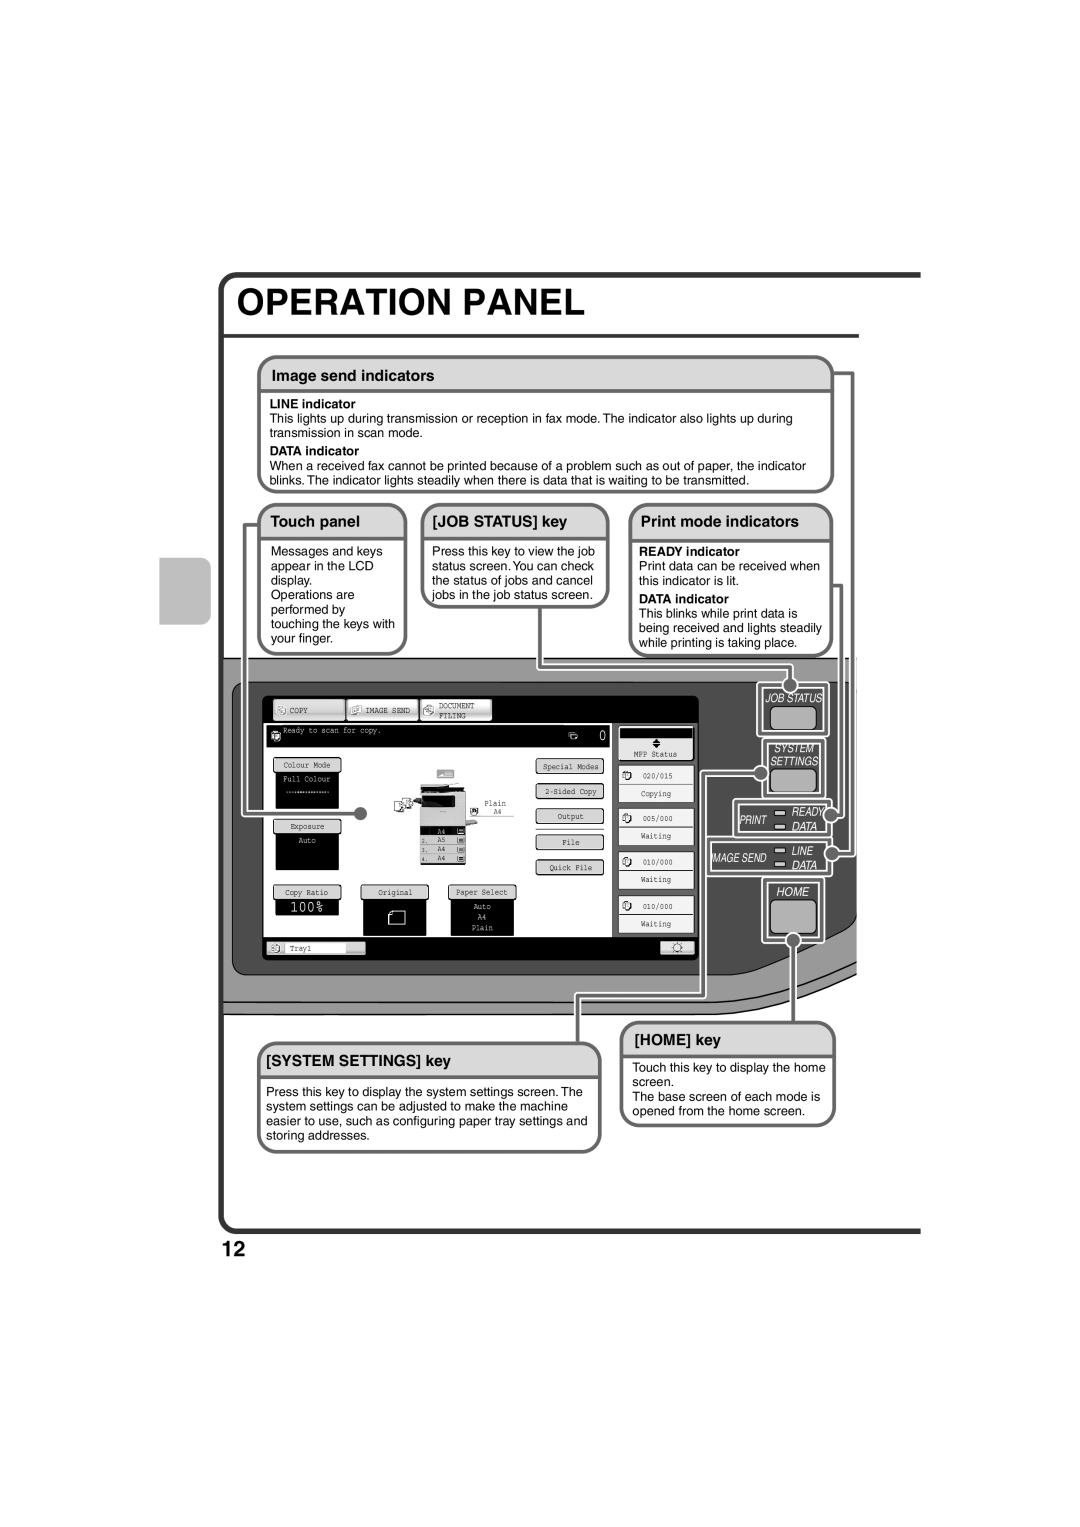 Sharp MX-C311 Operation Panel, 100%, Image send indicators, Touch panel, JOB STATUS key, Print mode indicators, HOME key 